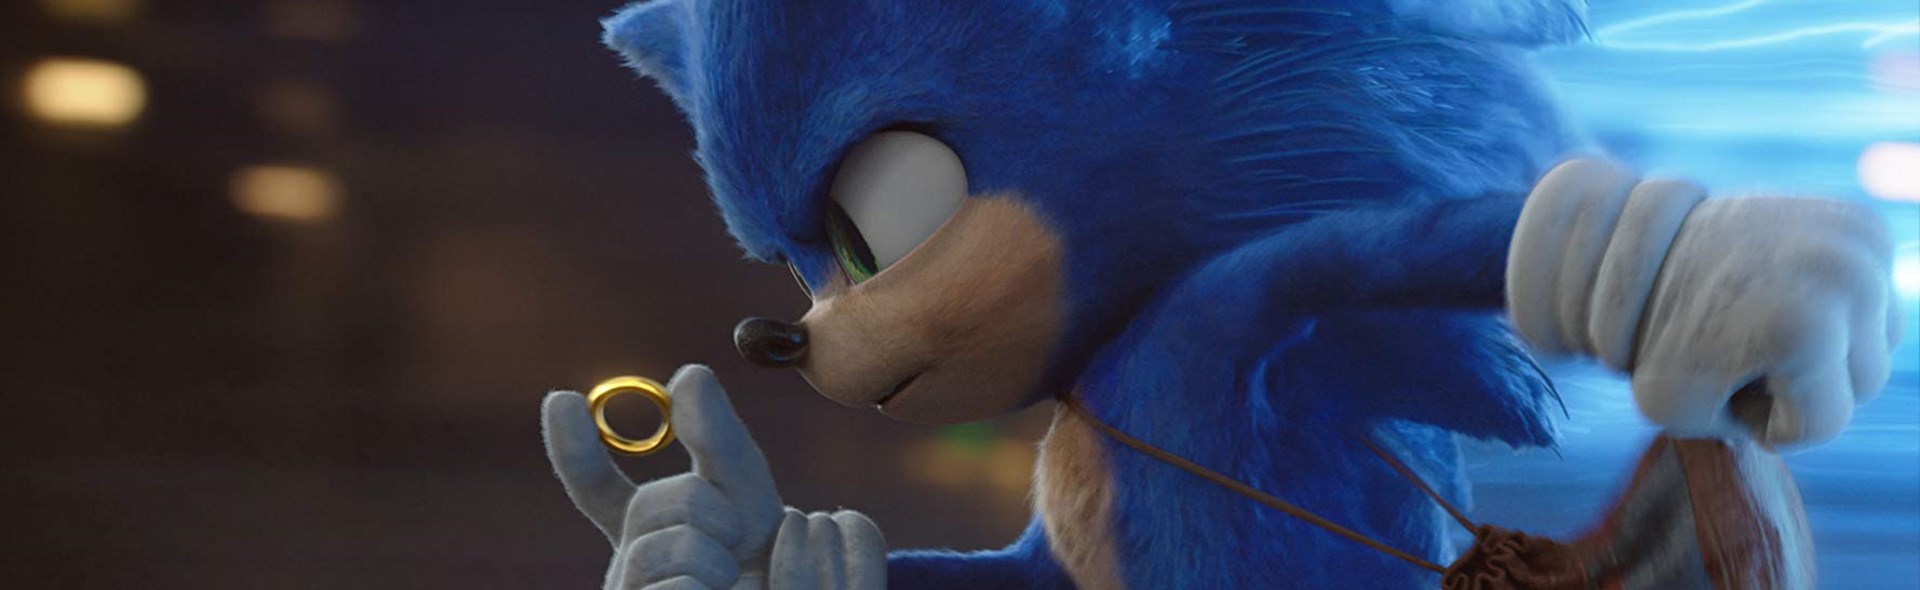 Sonic The Hedgehog (PG)